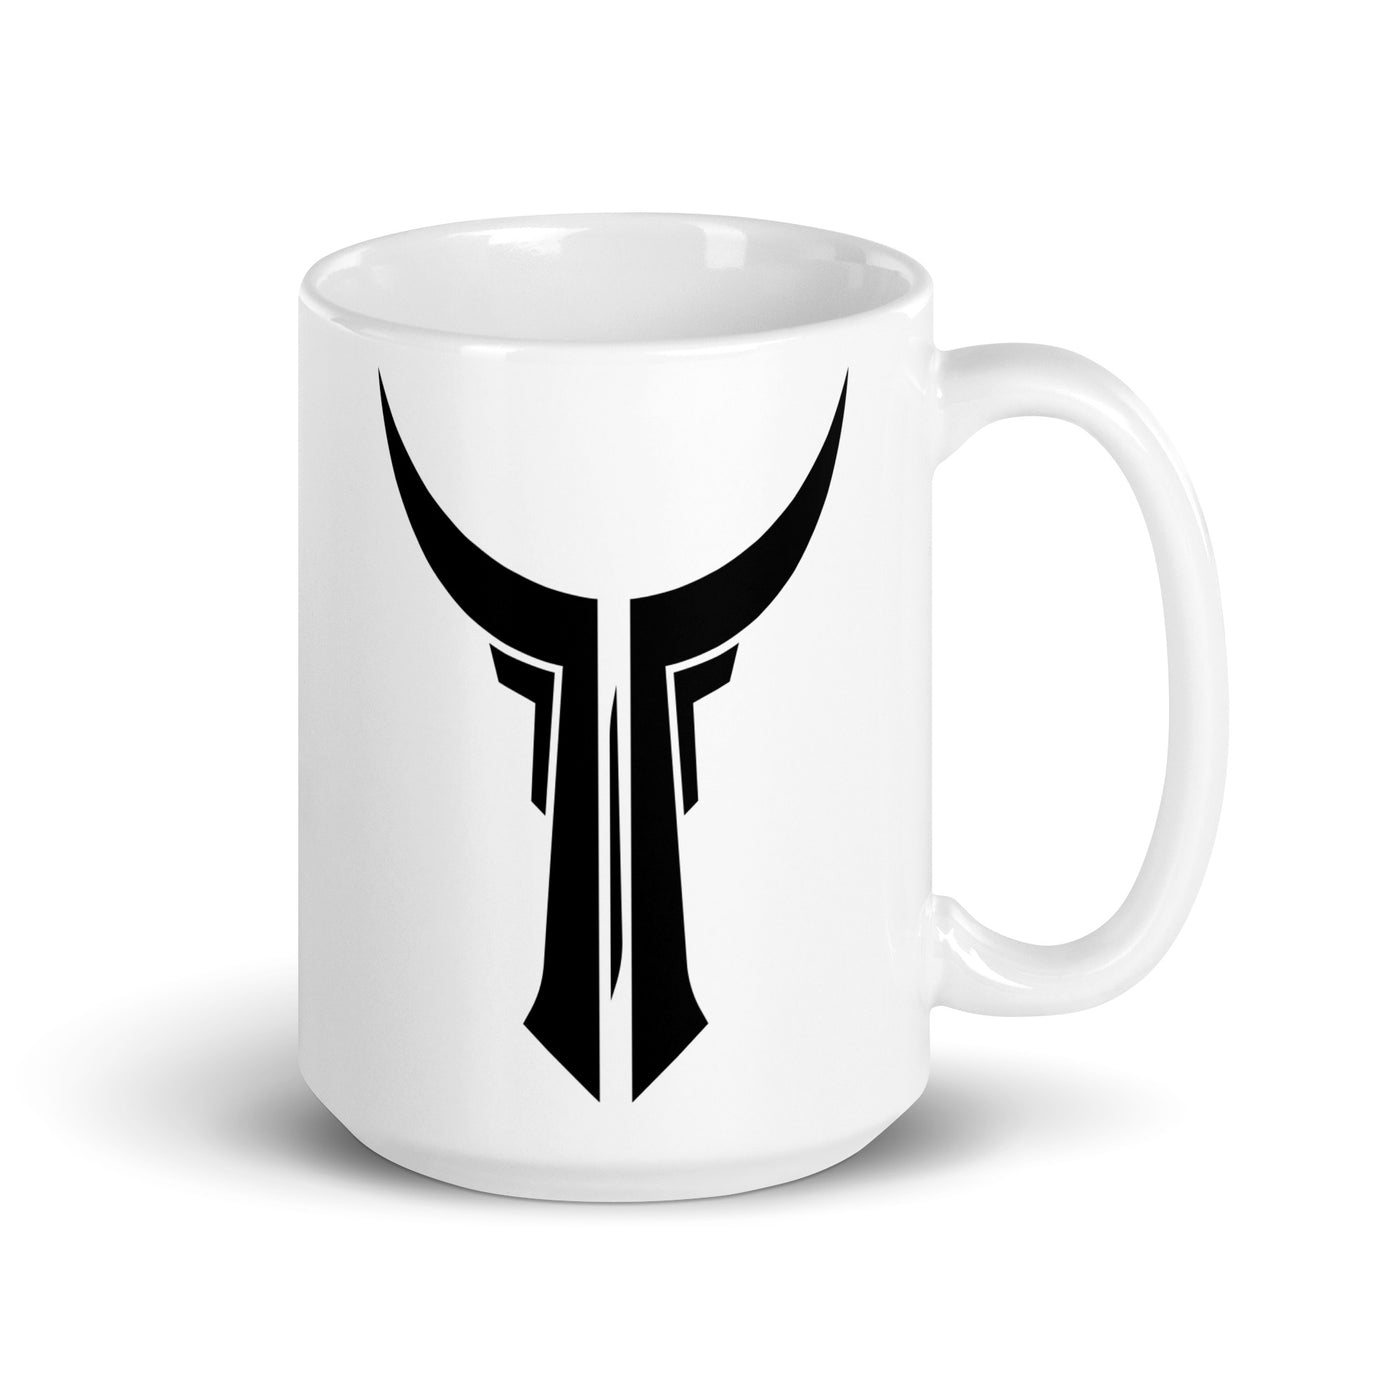 Titan White glossy mug